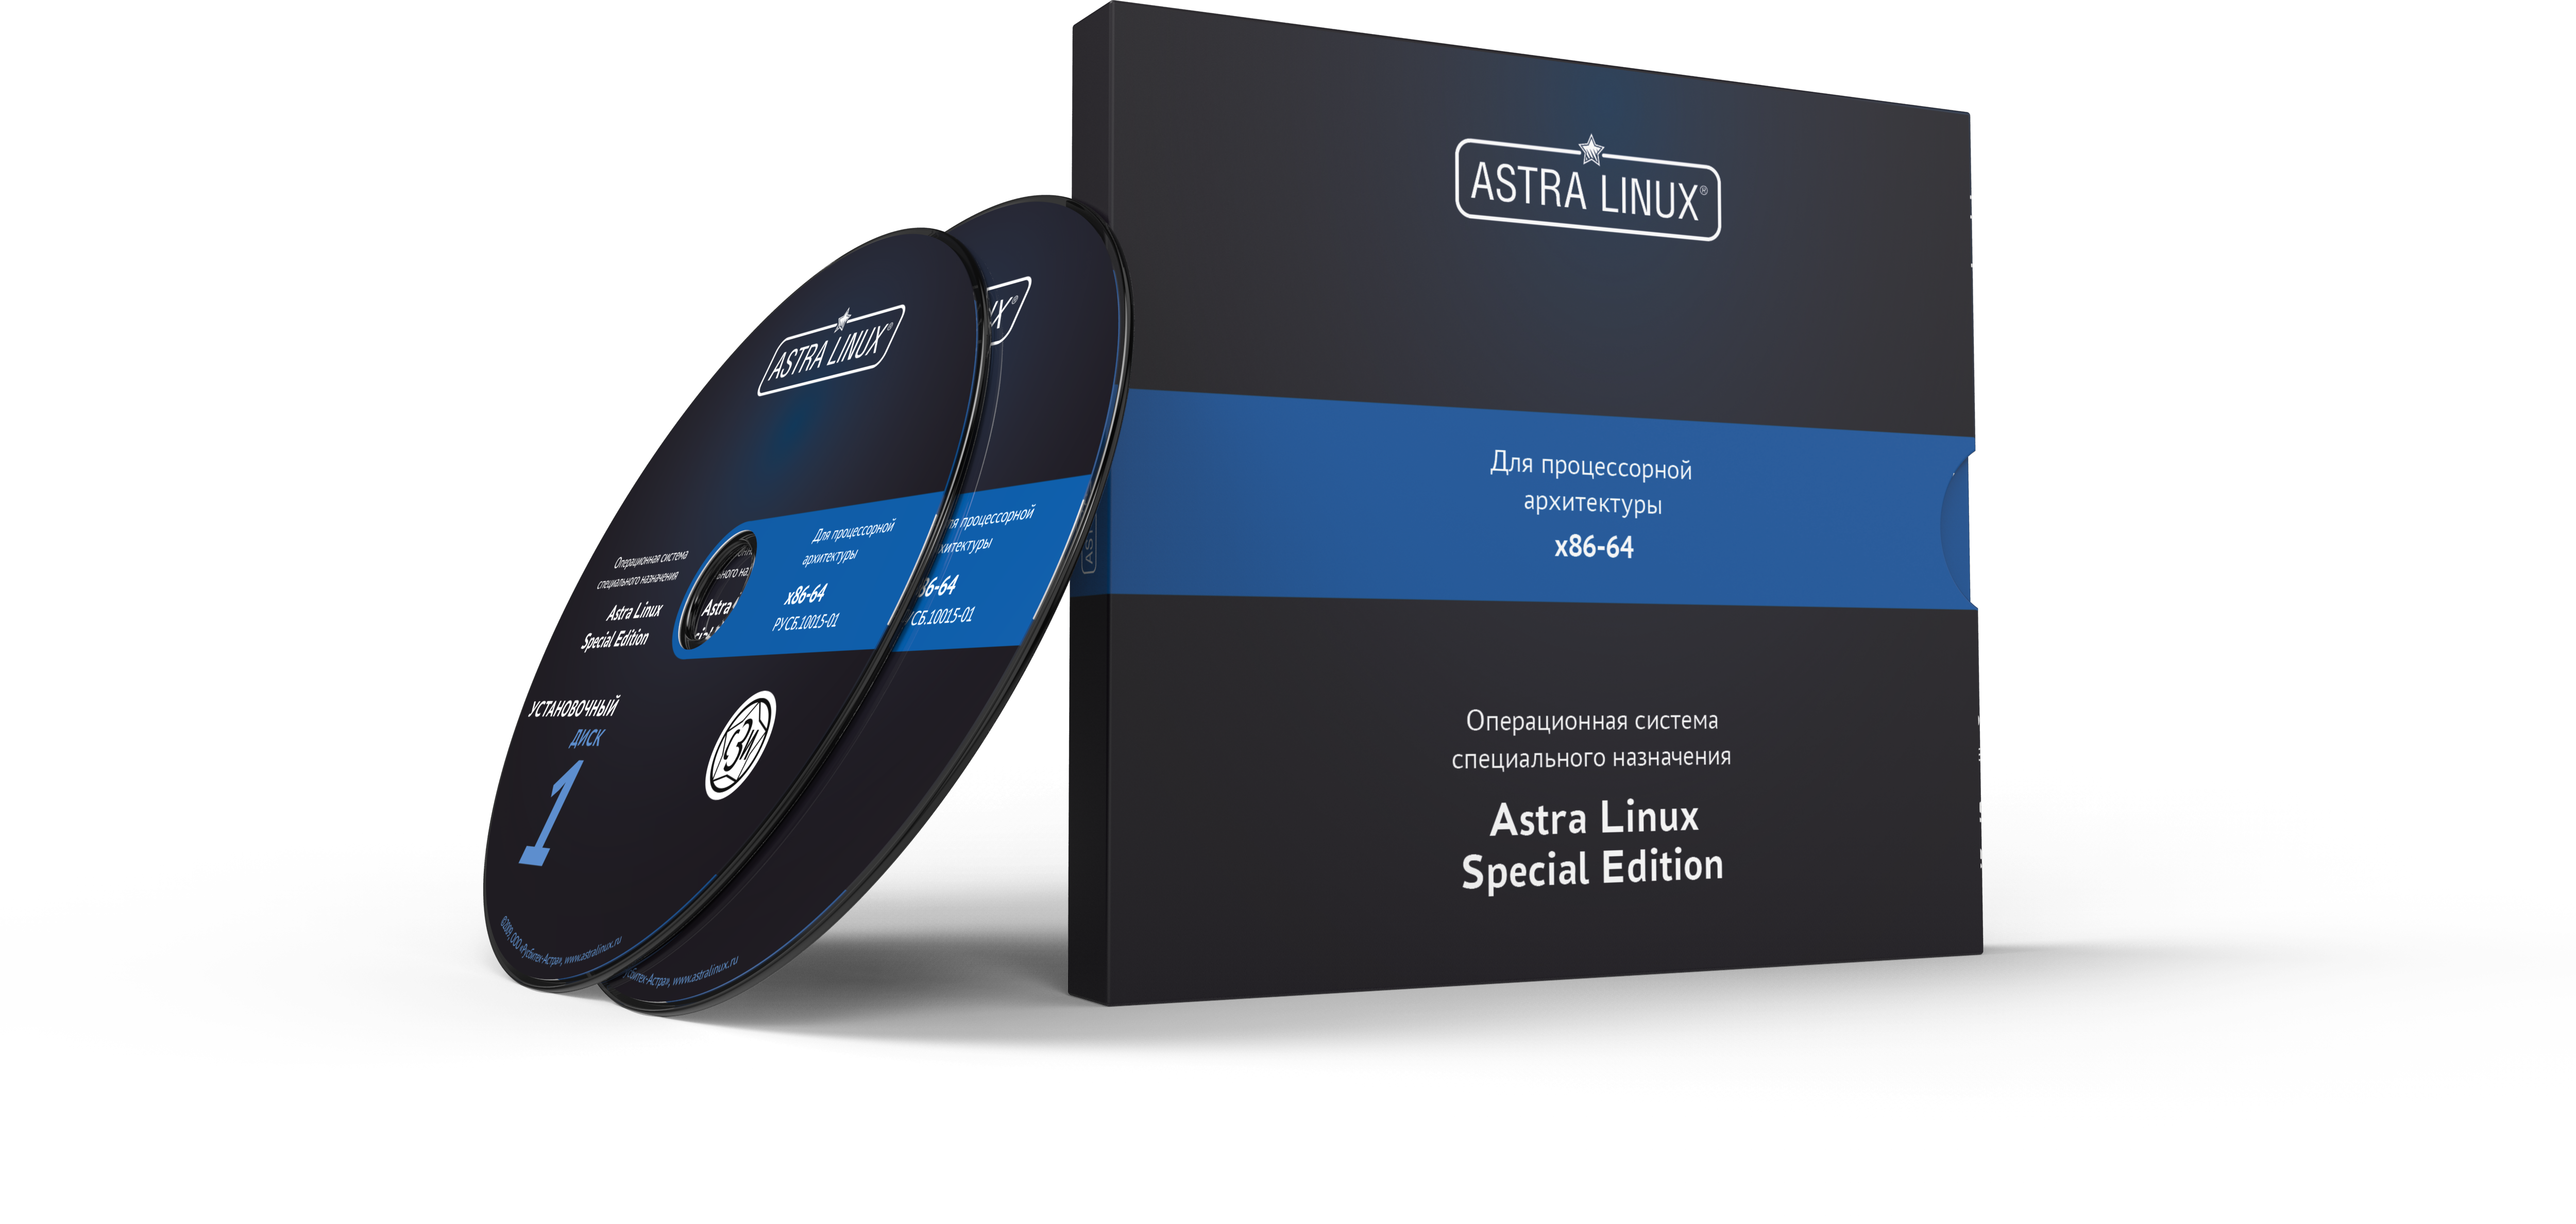 Astra Linux Special Edition 1.7 - Воронеж, "Усиленный", электронный, ФСТЭК, на 12 мес., ТП "Стандарт" на 12 мес.